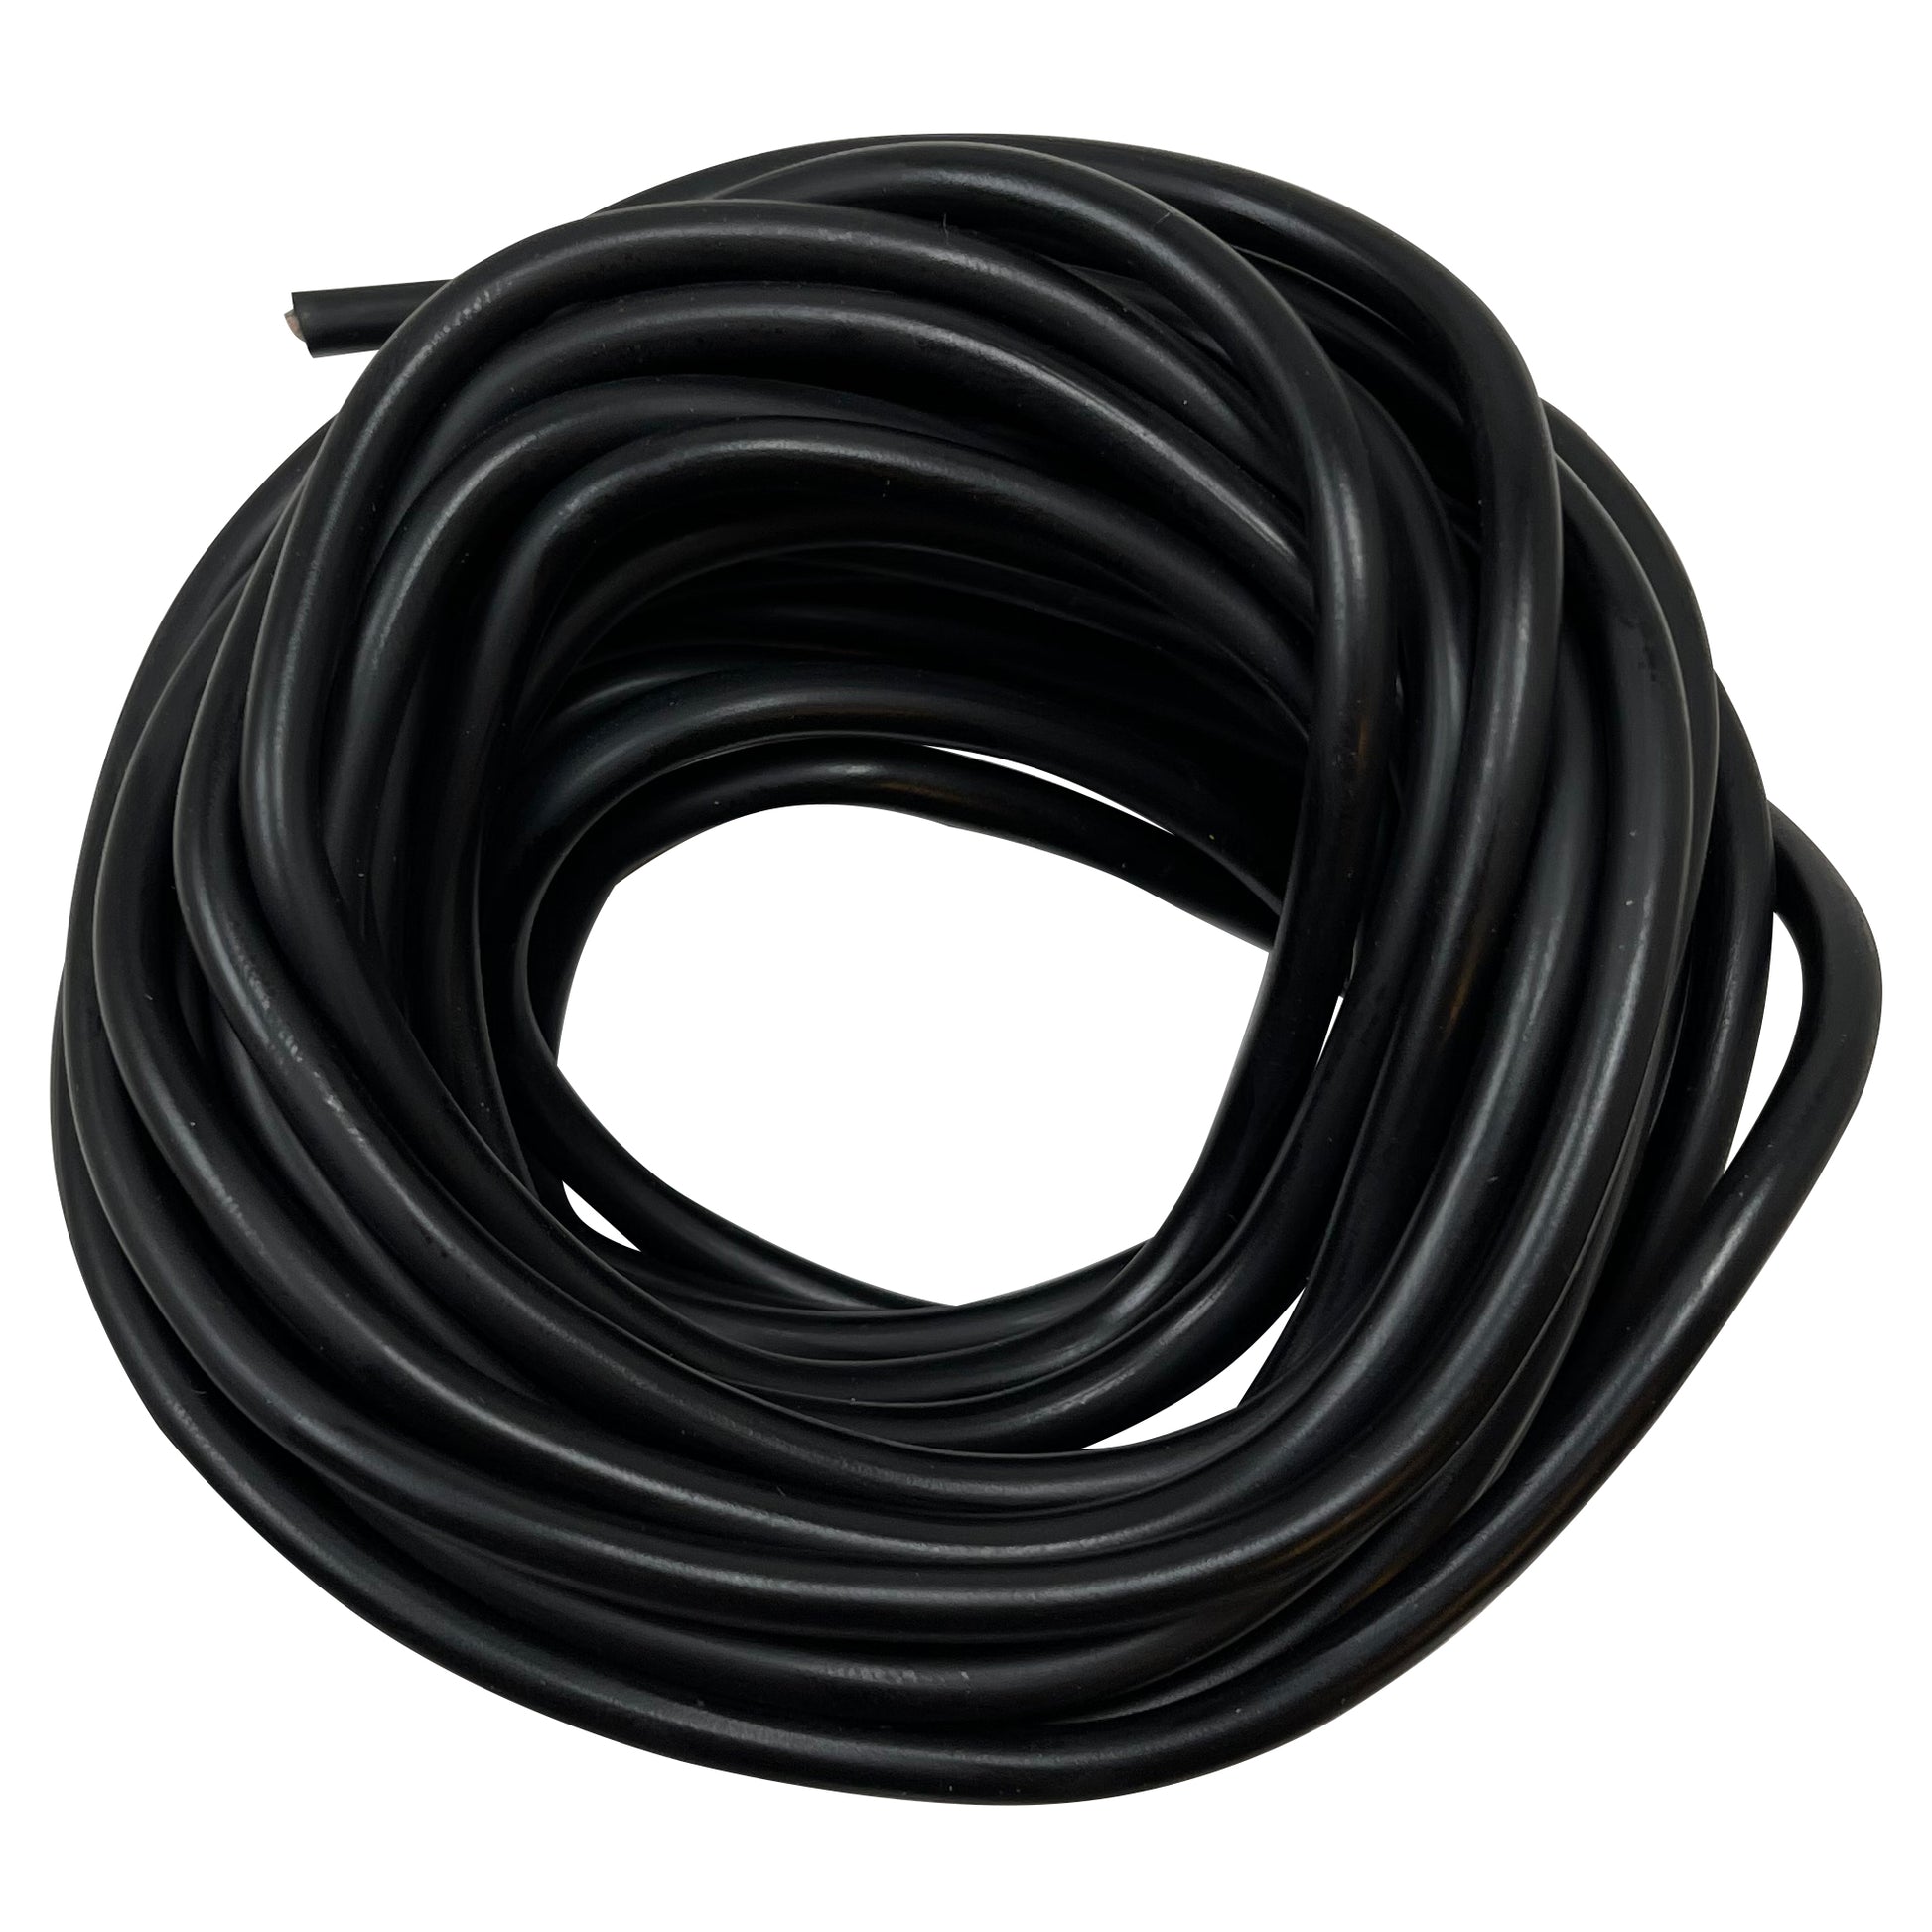 20 Gauge Universal Automotive Fusible Link Wire - 10 FEET